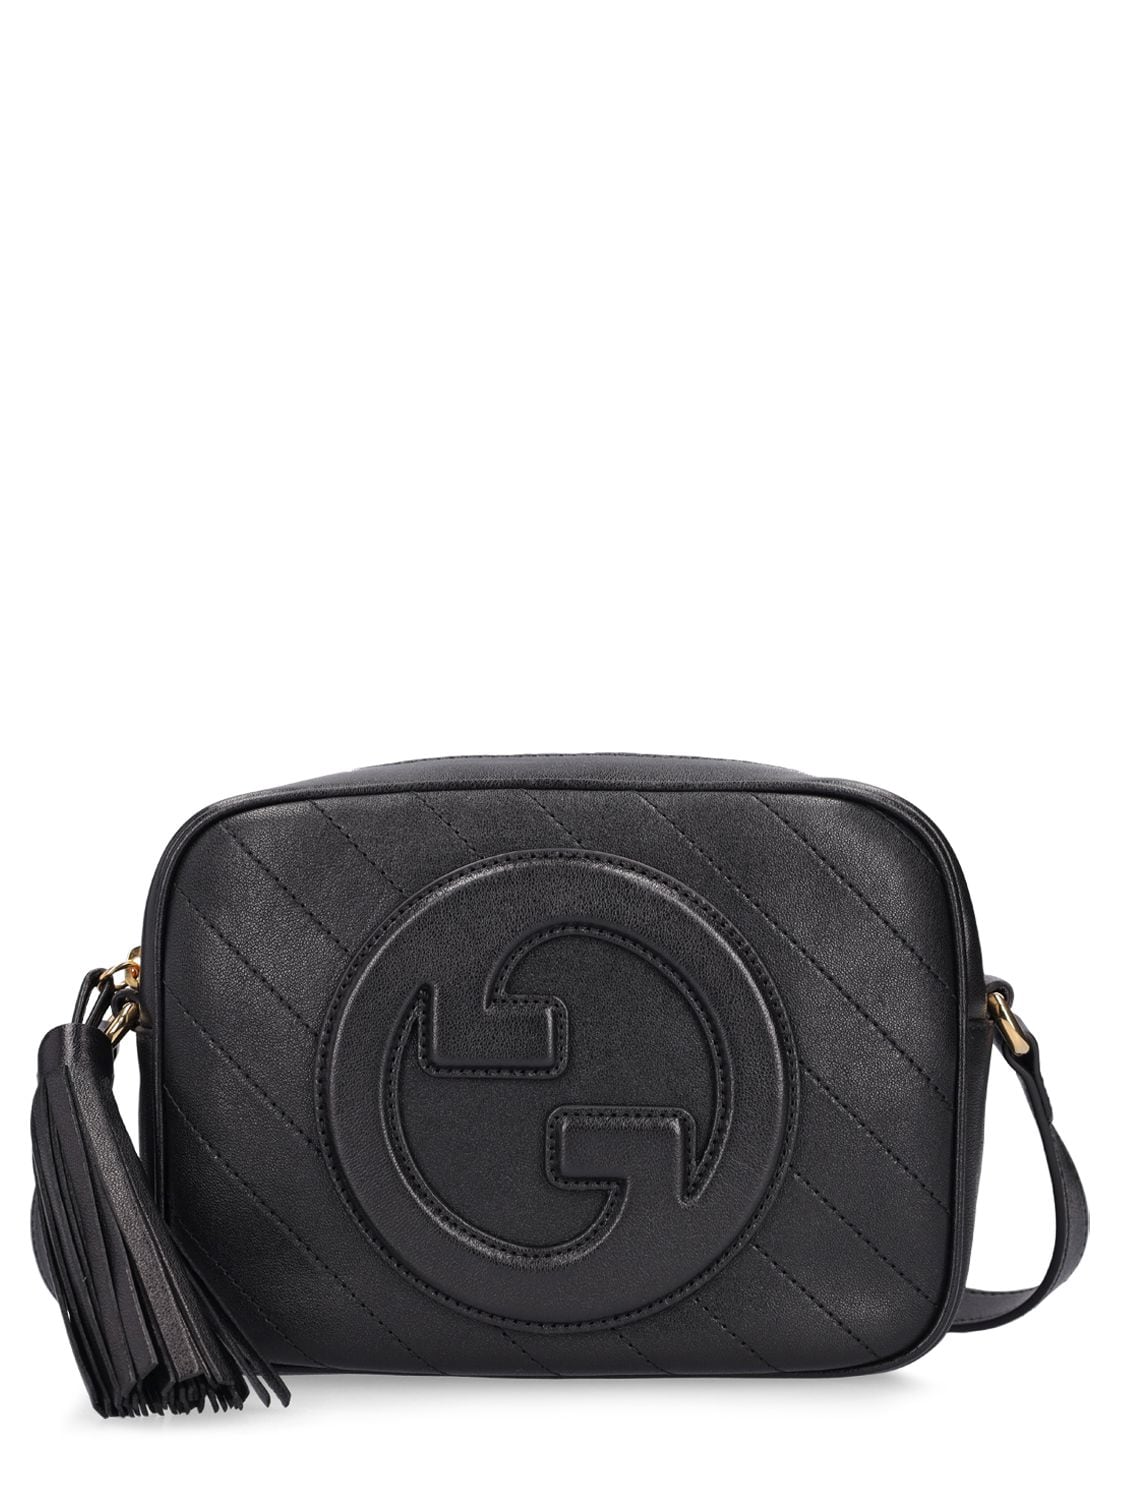 Gucci Blondie Sakai Leather Shoulder Bag In Black